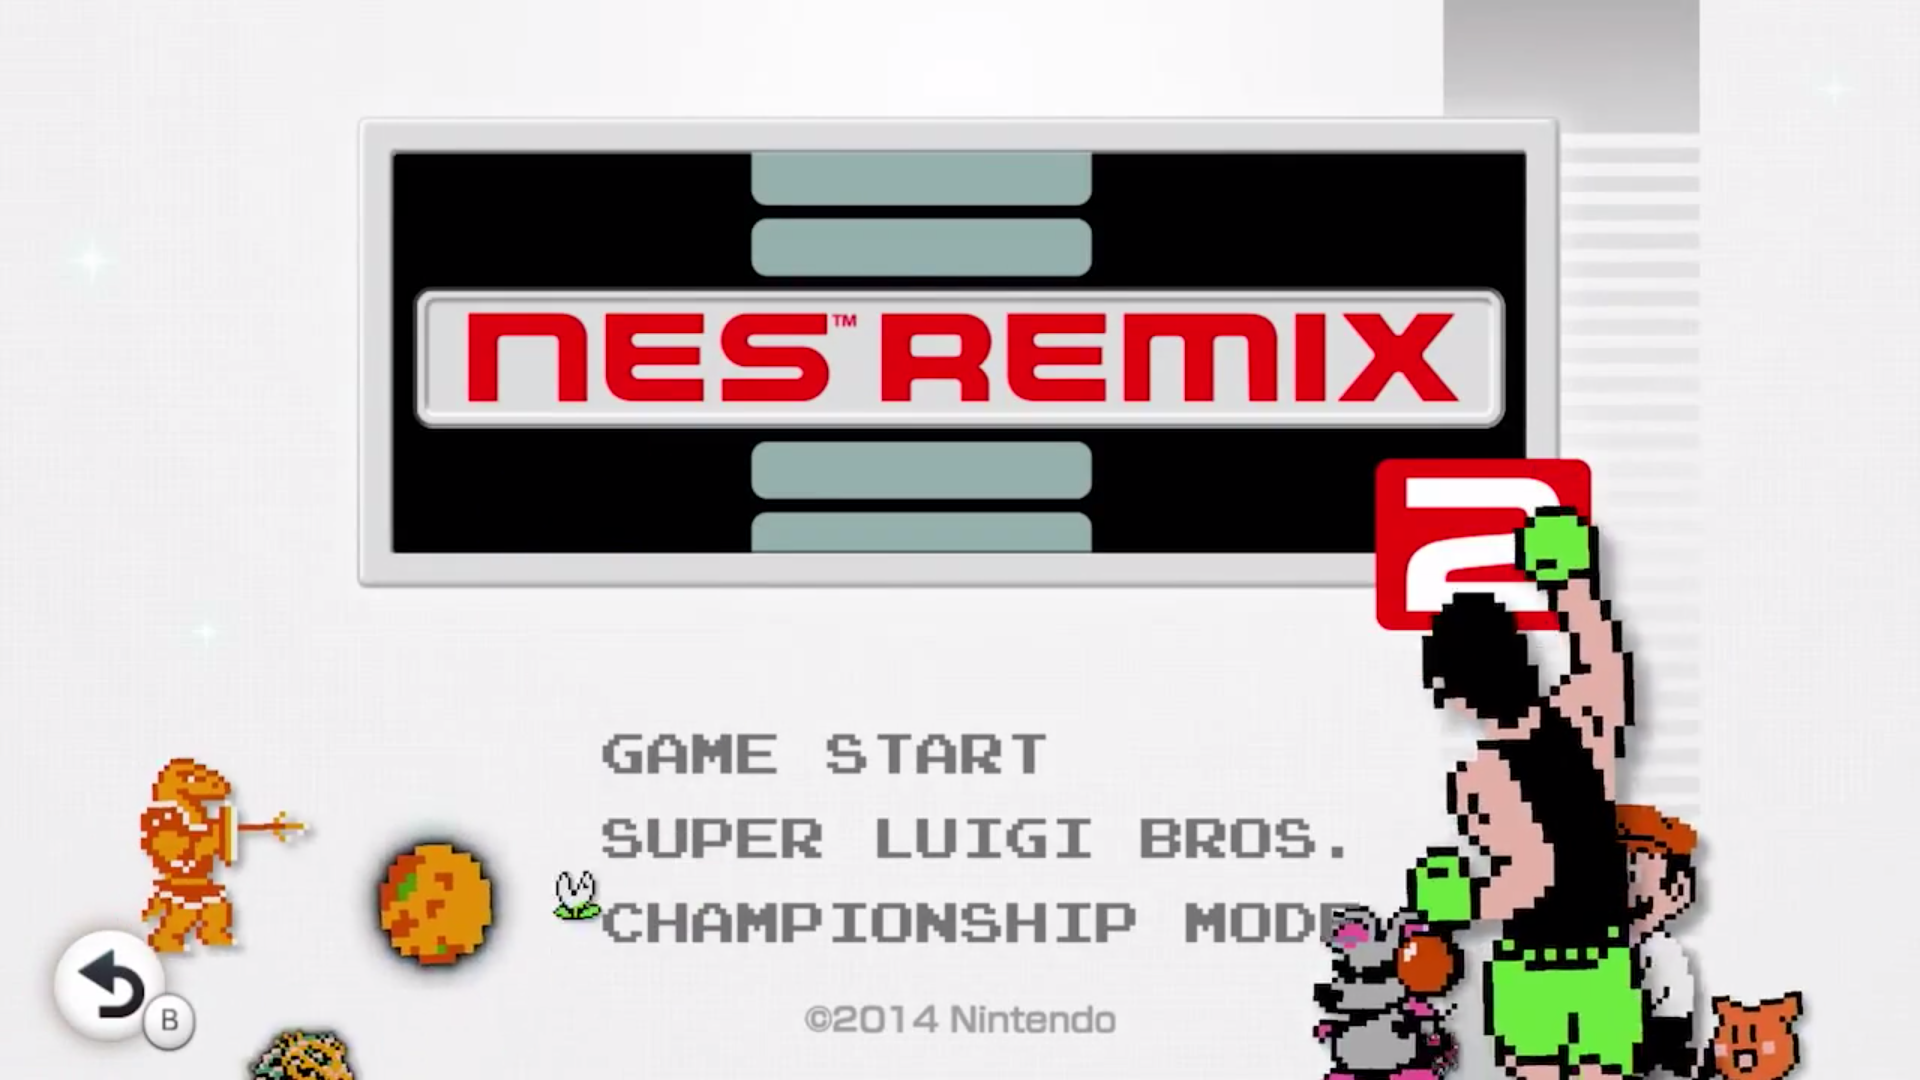 Nintendo PR: New Championship Mode Brings Nostalgic Competition to NES Remix 2